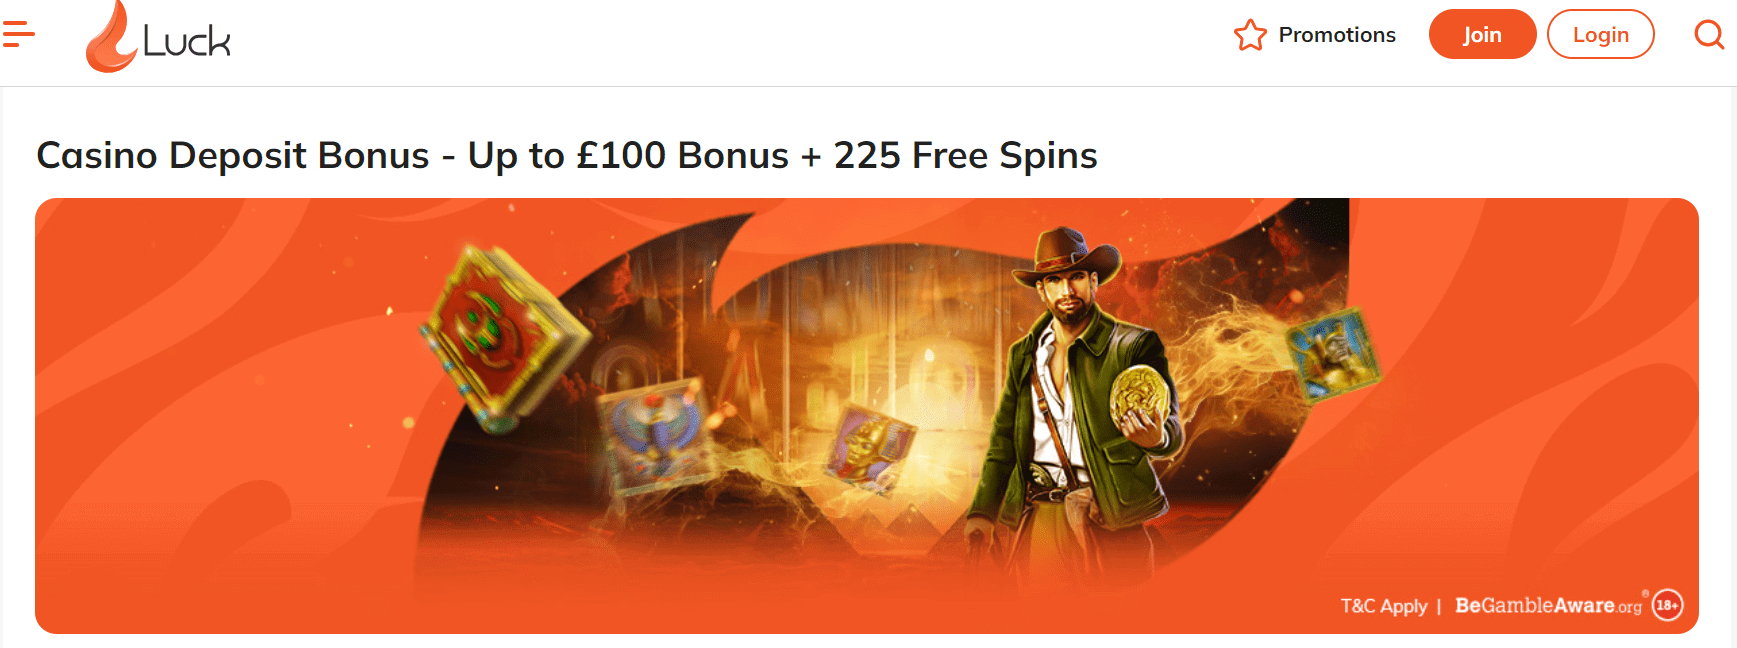 luck casino welcome bonus